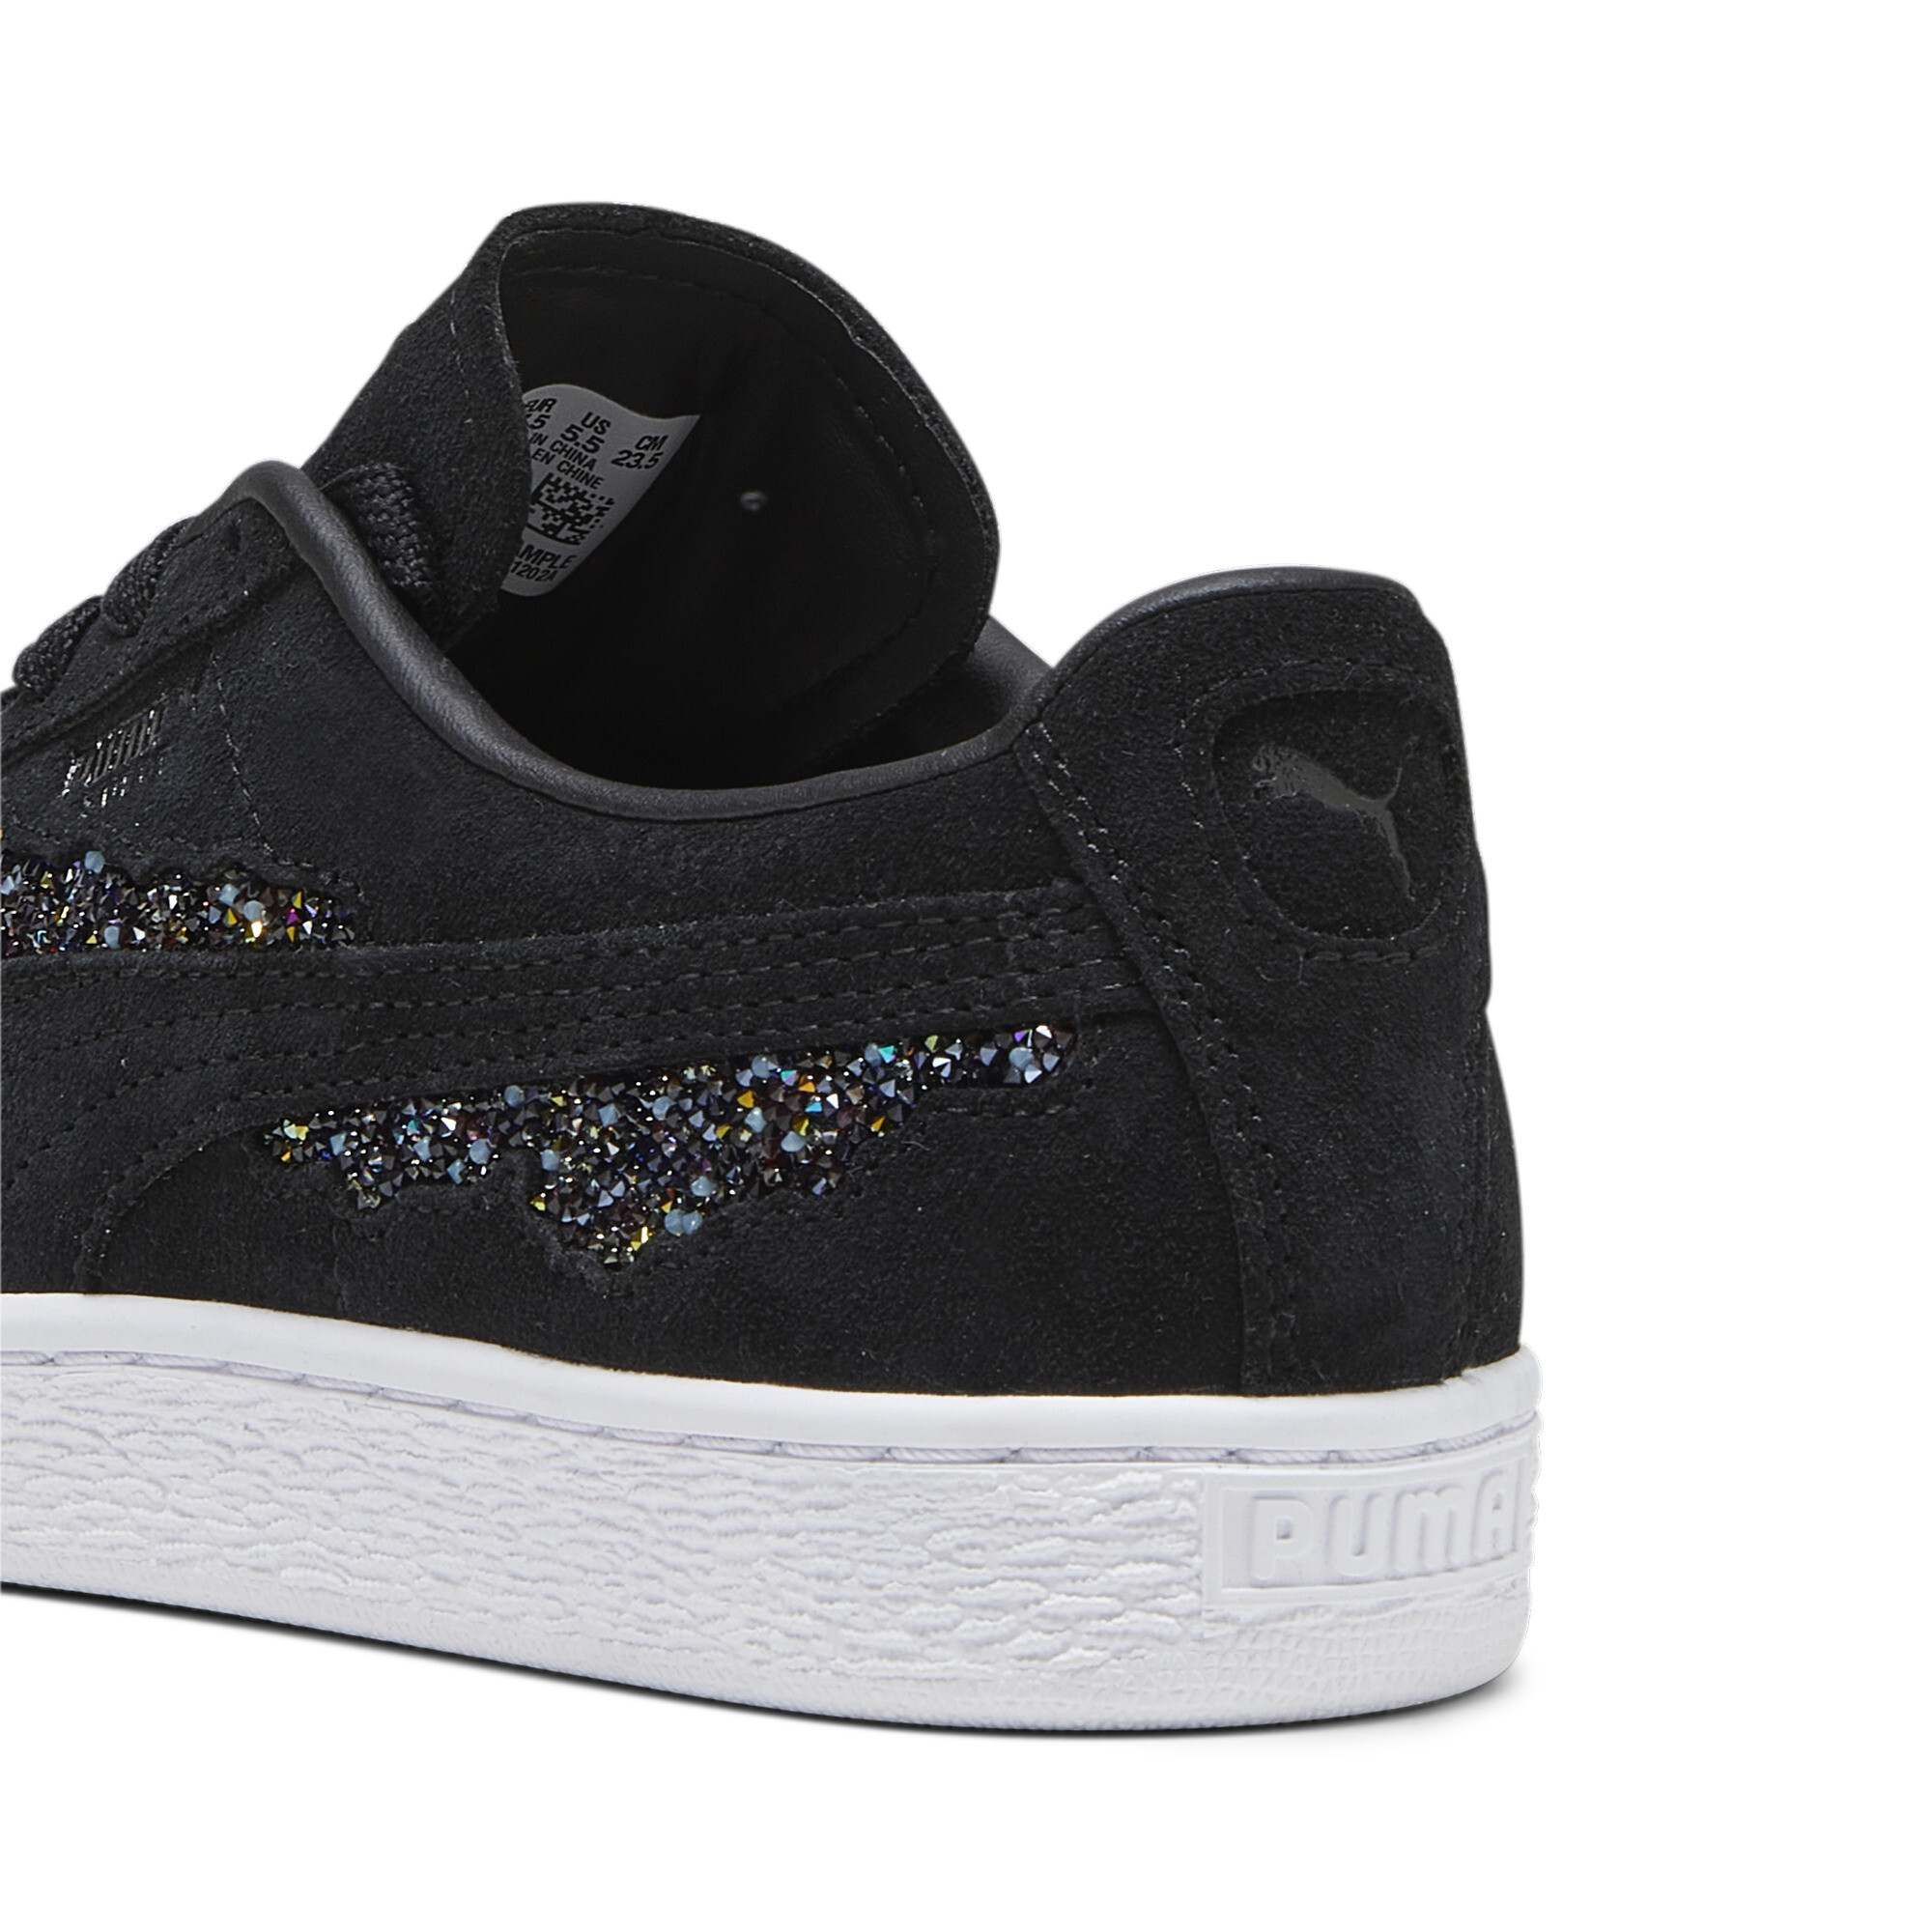 Women's PUMA Swarovski Crystals Suede Sneakers In Black, Size EU 35.5